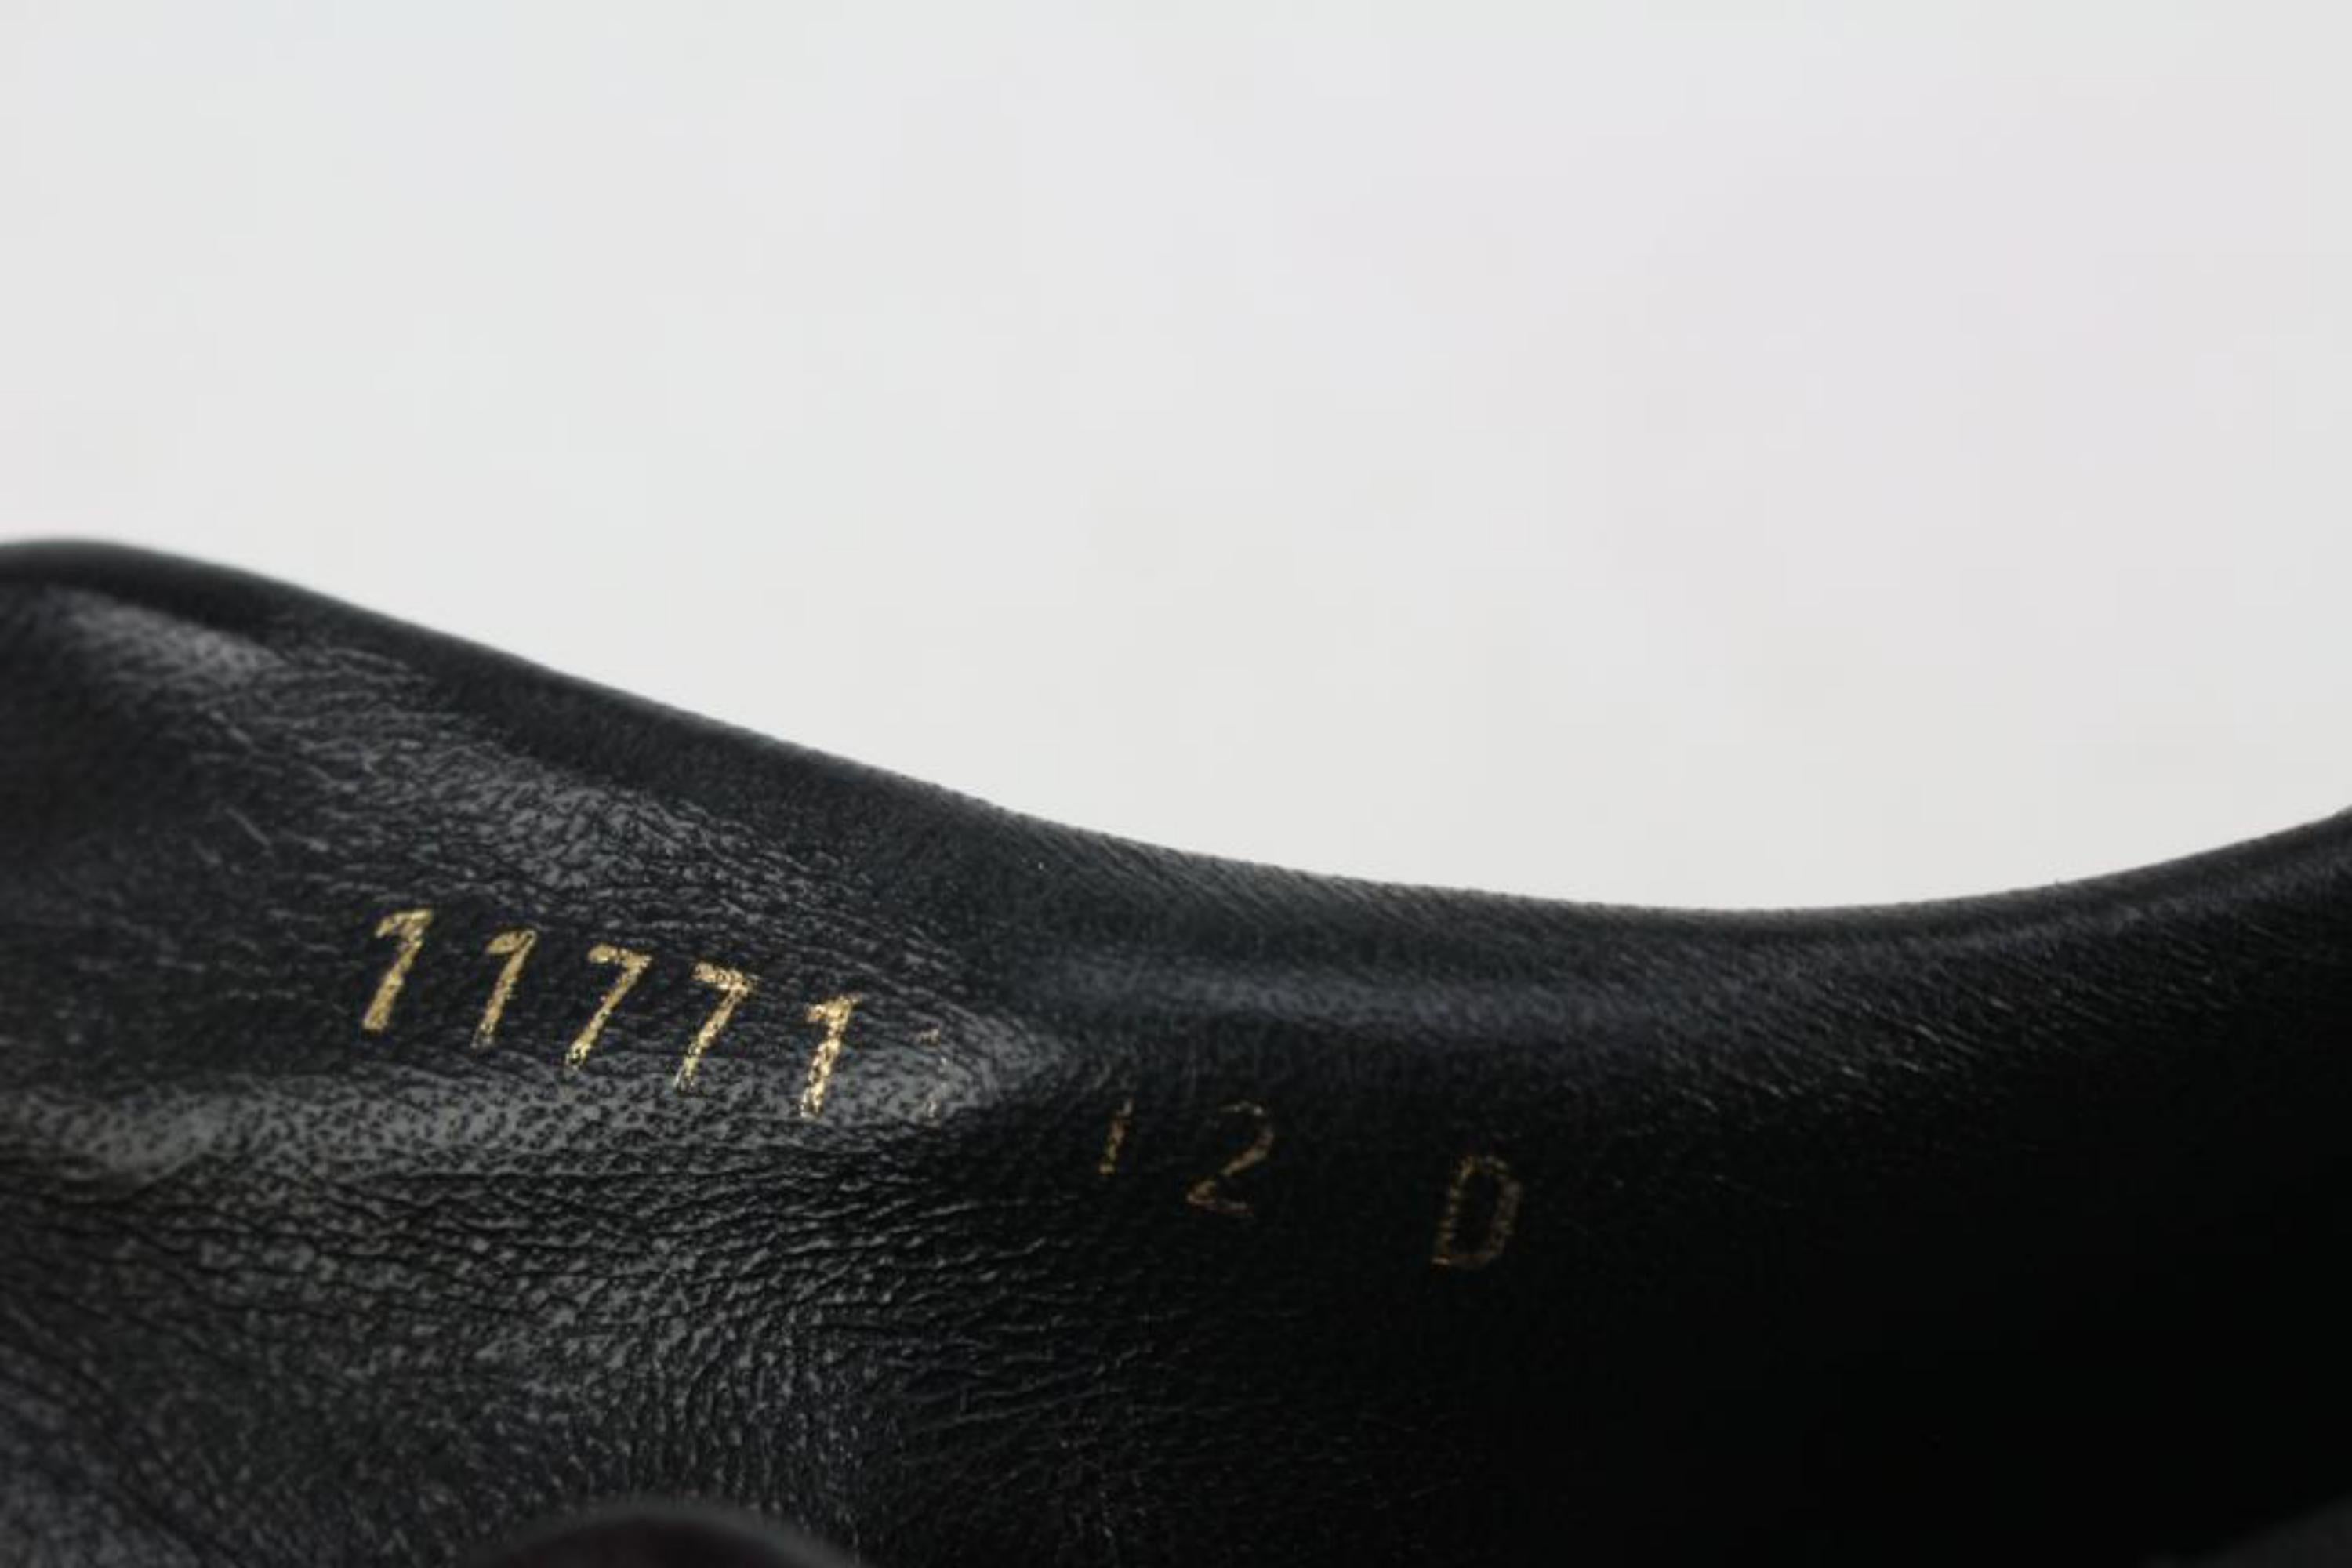 shoe box date code